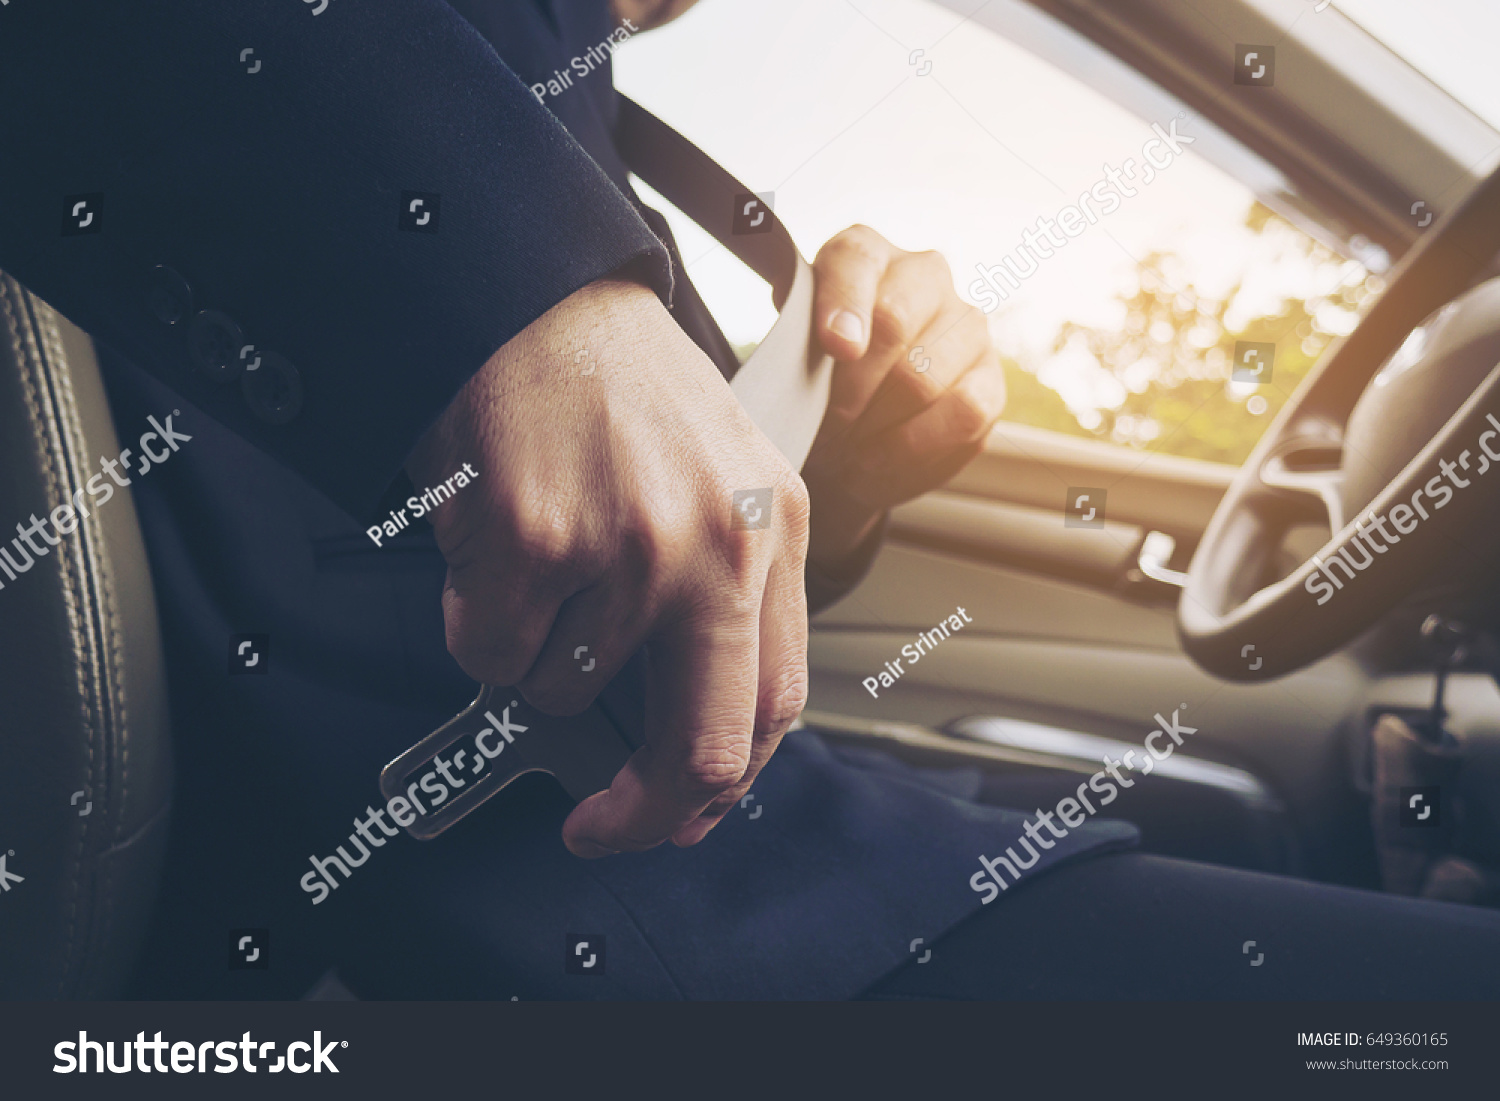 Man putting car seat belt before driving, close up at belt buckle, safe drive concept #649360165